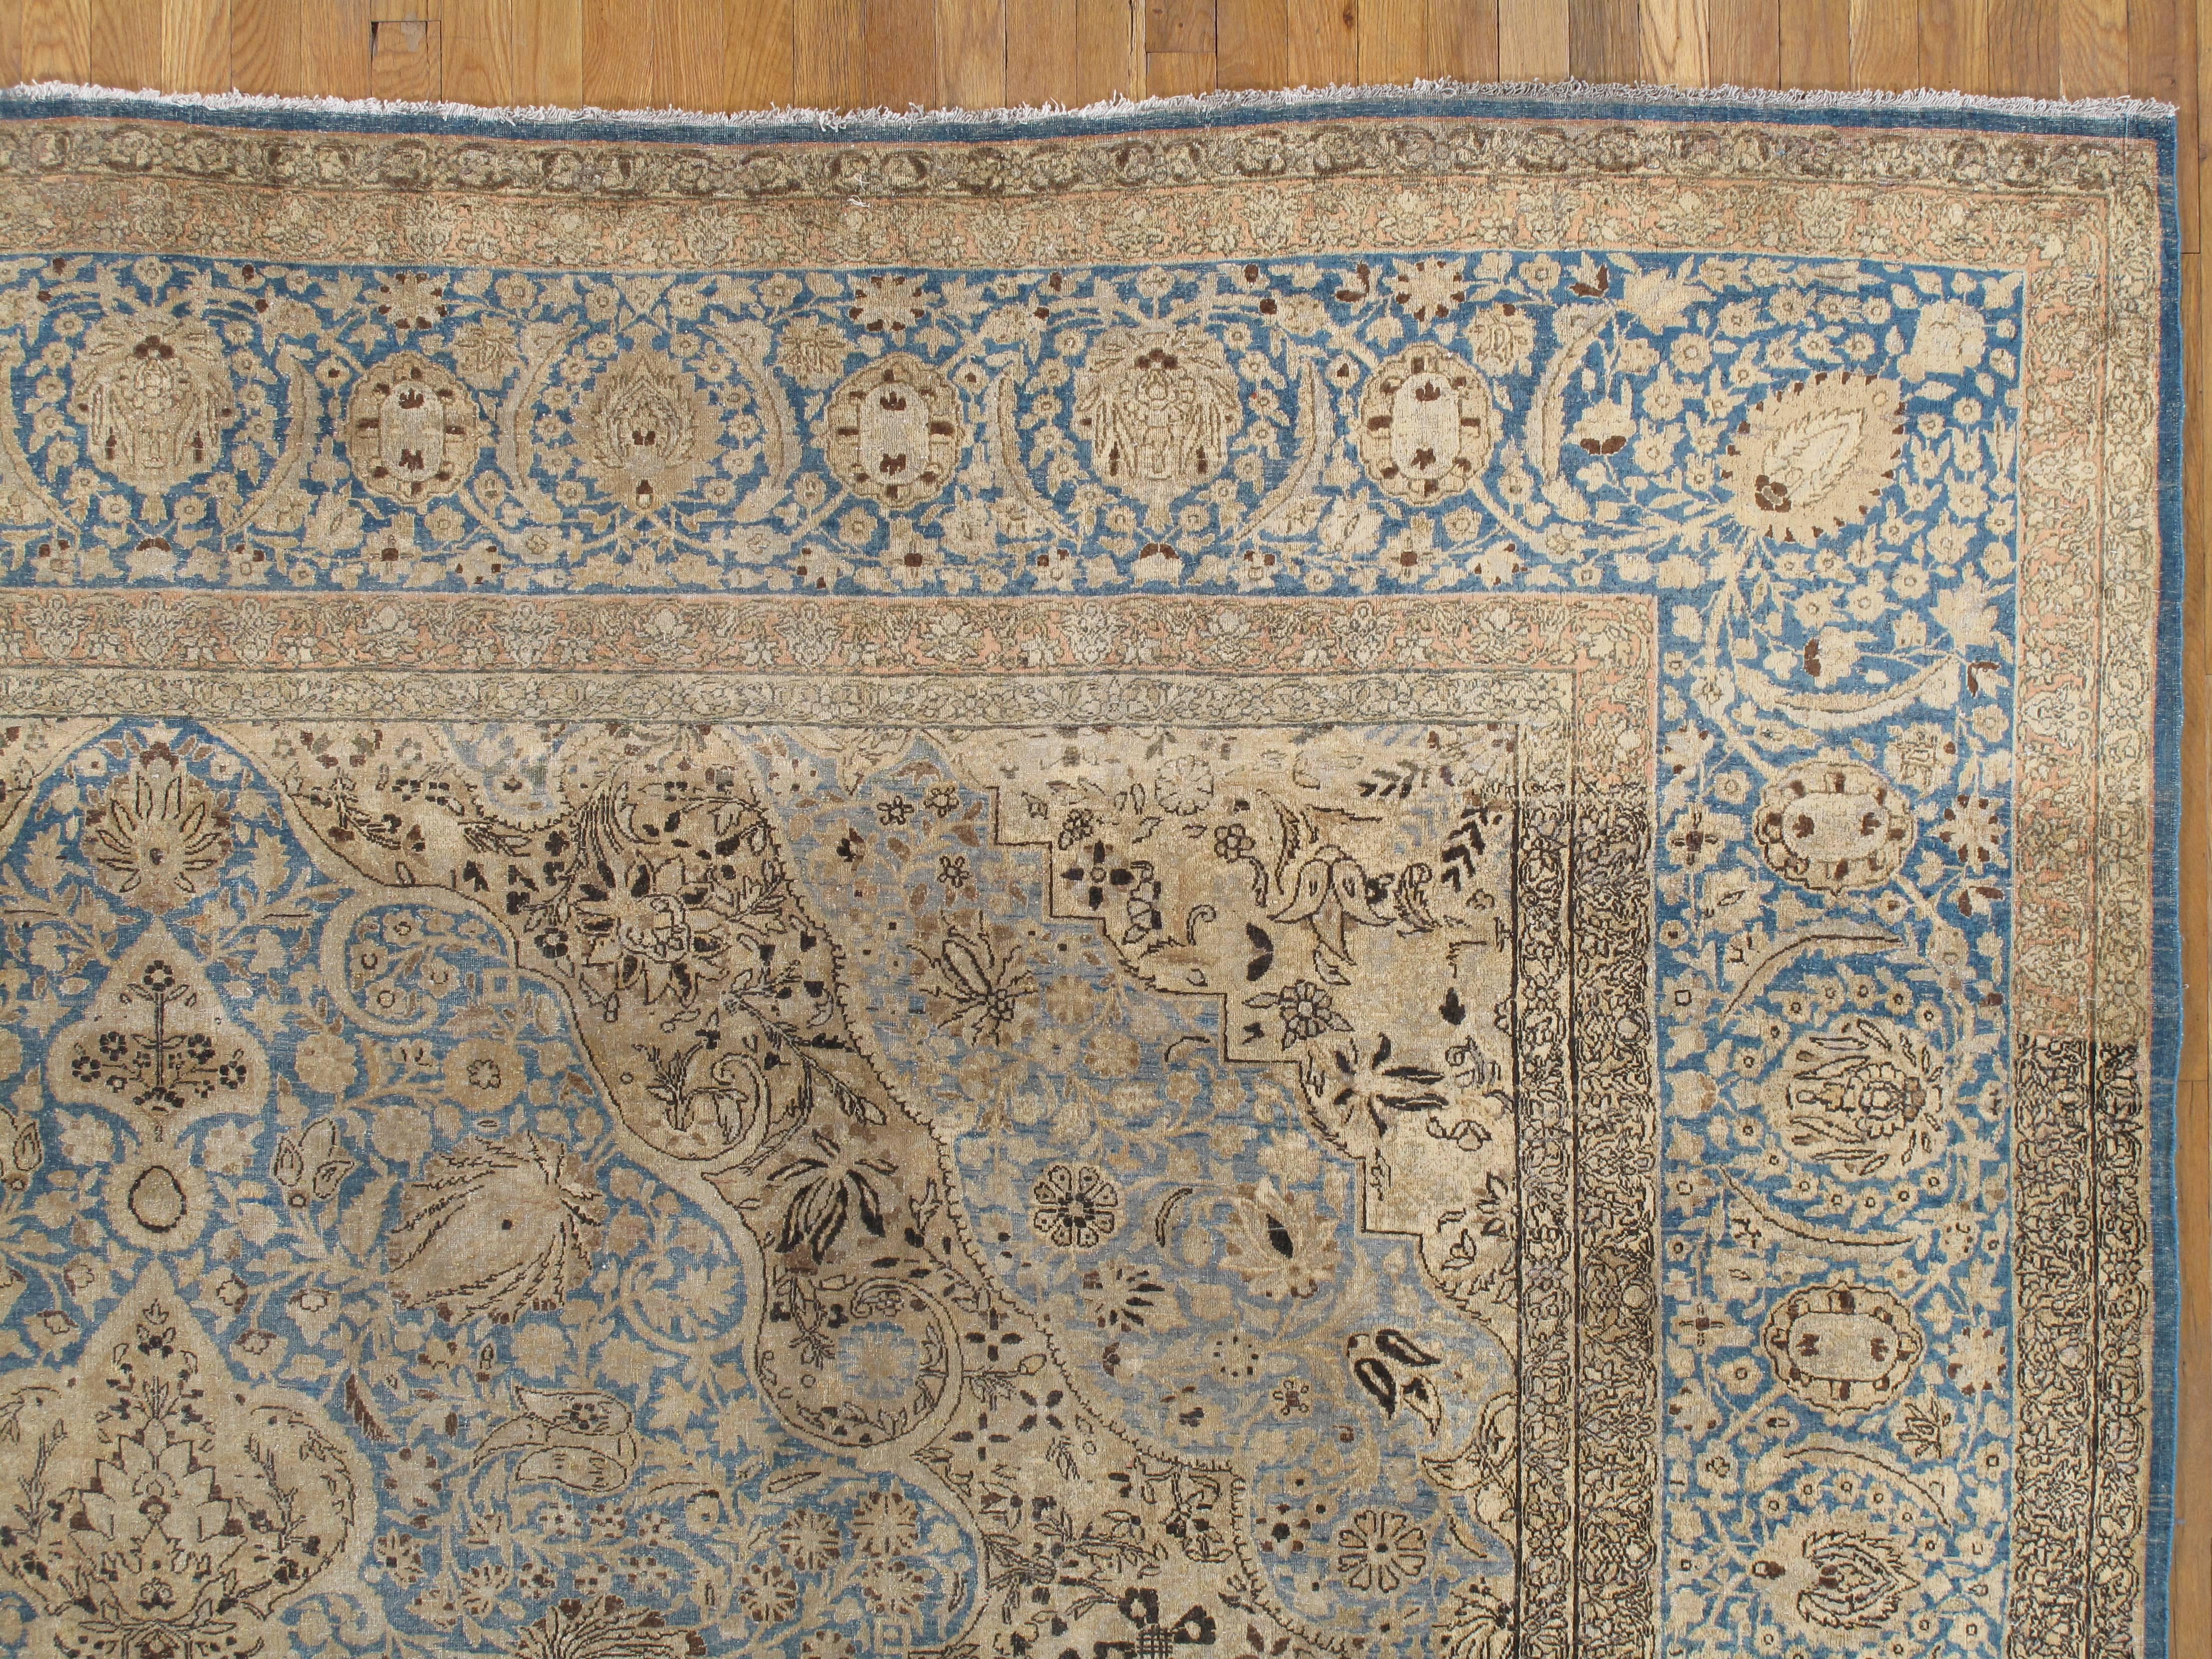 Hand-Knotted Antique Tabriz Carpet, Handmade Carpet, Light Blue, Gold and Ivory For Sale